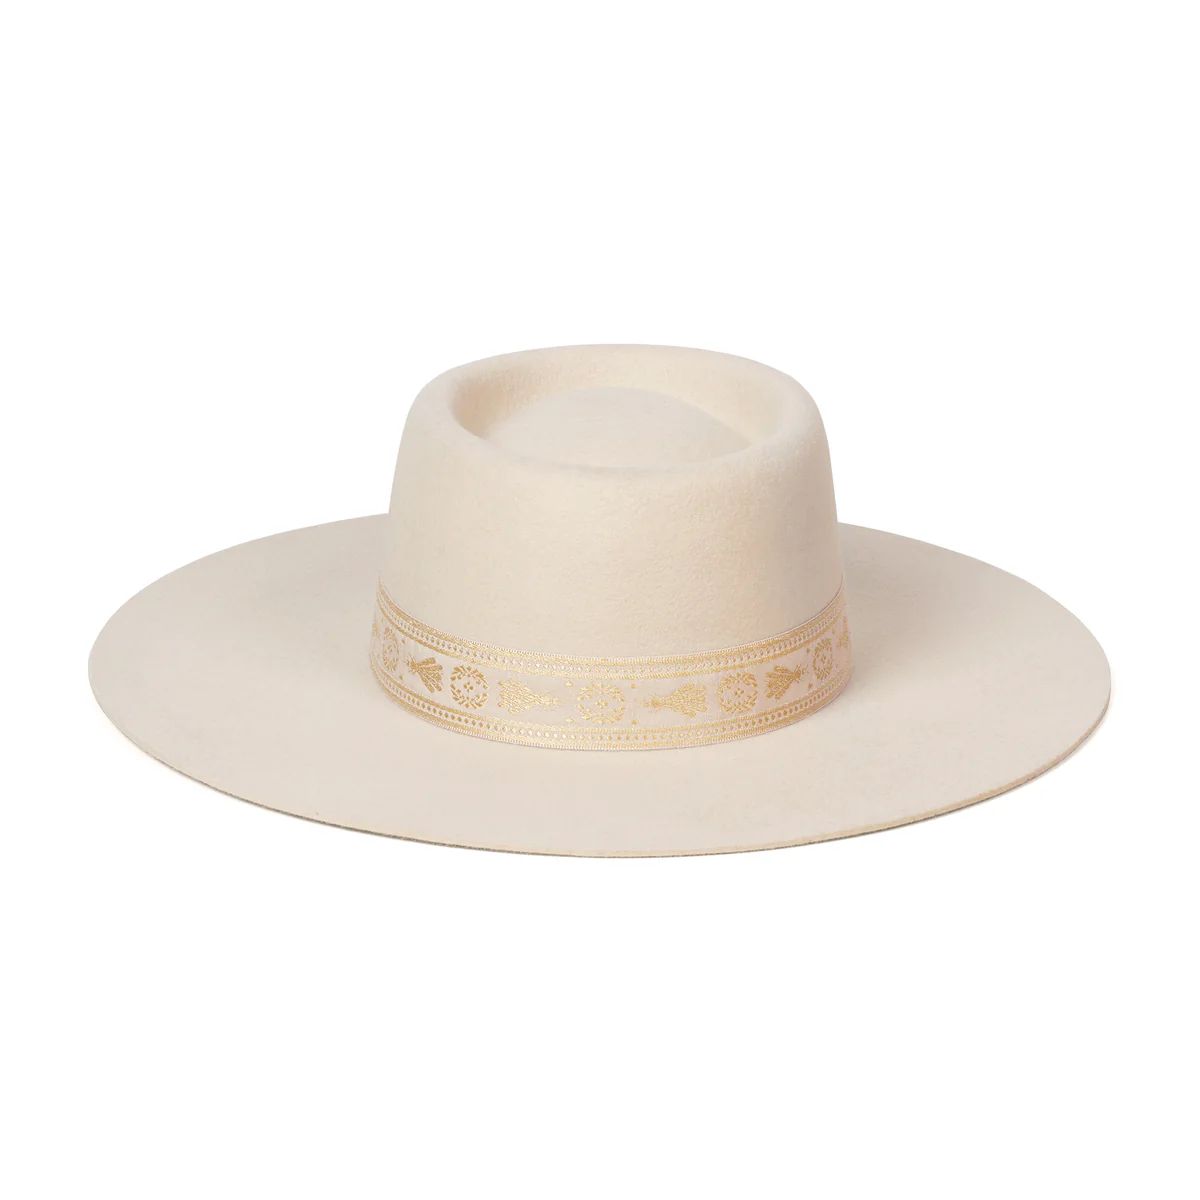 Juno Boater - Wool Felt Boater Hat in White | Lack of Color | Lack of Color